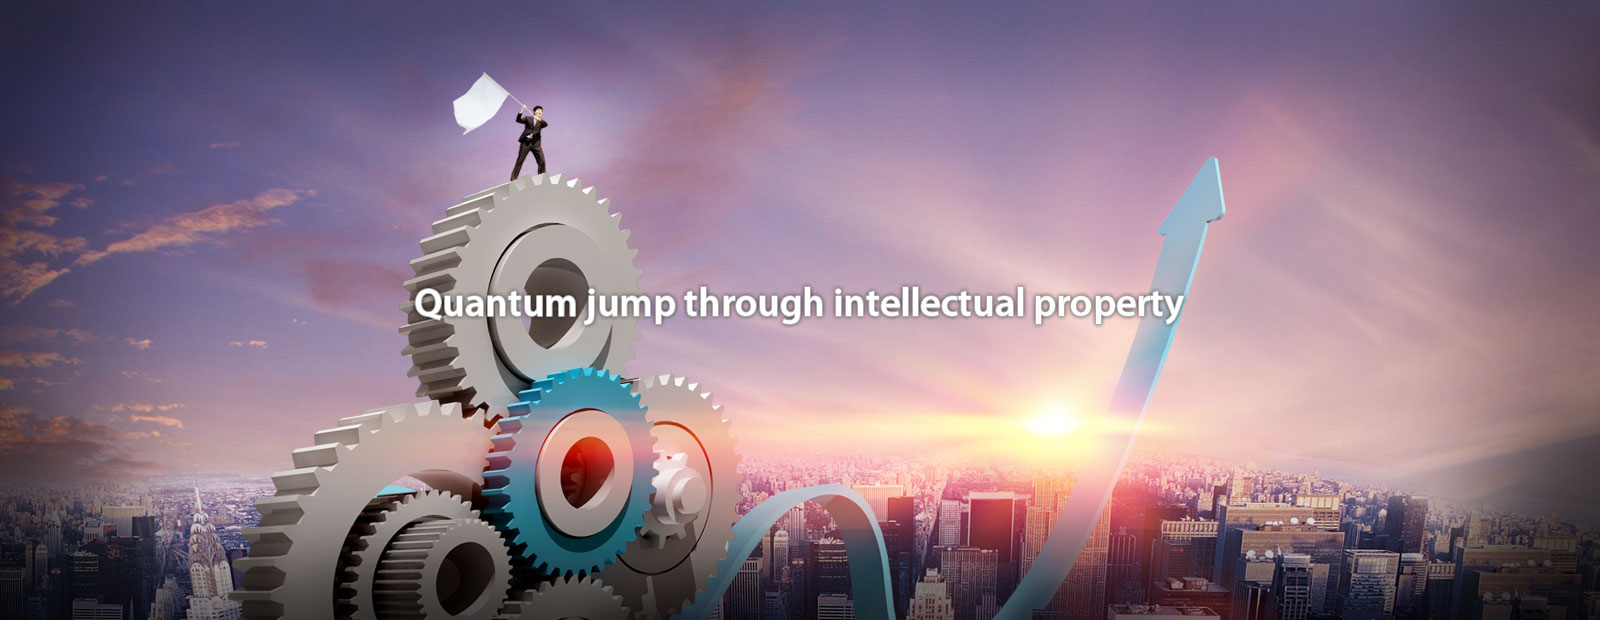 Quantum jump through intellectual property